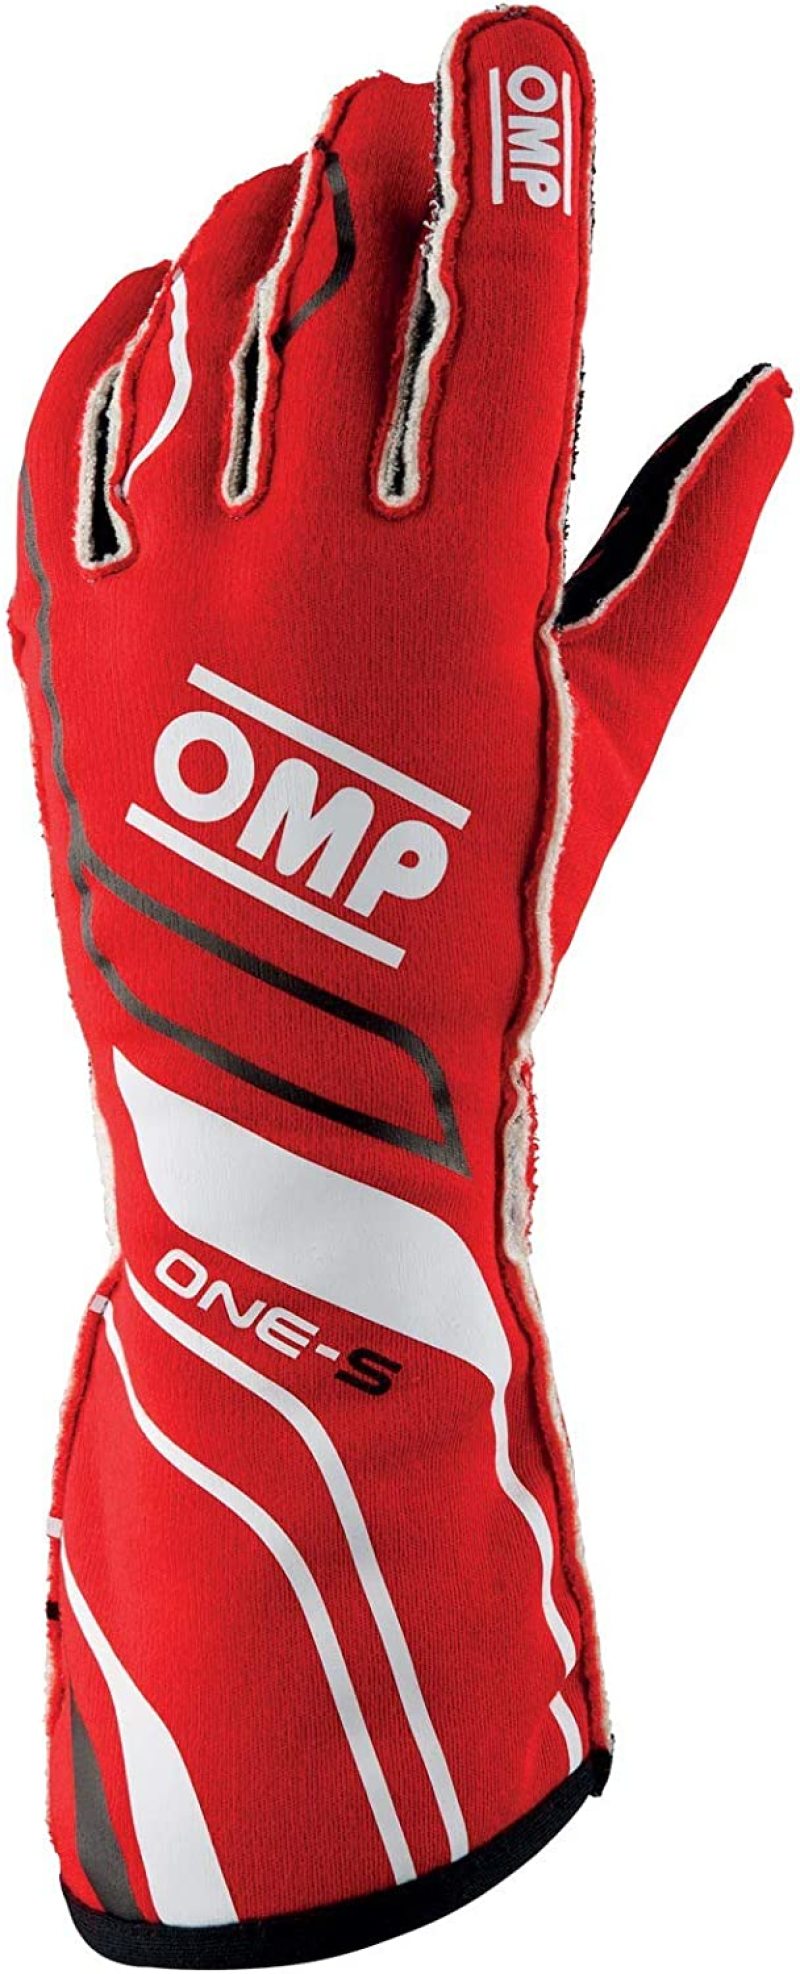 OMP One-S Gloves Red - Size Xs Fia 8556-2018 - IB0-0770-A01-061-XS